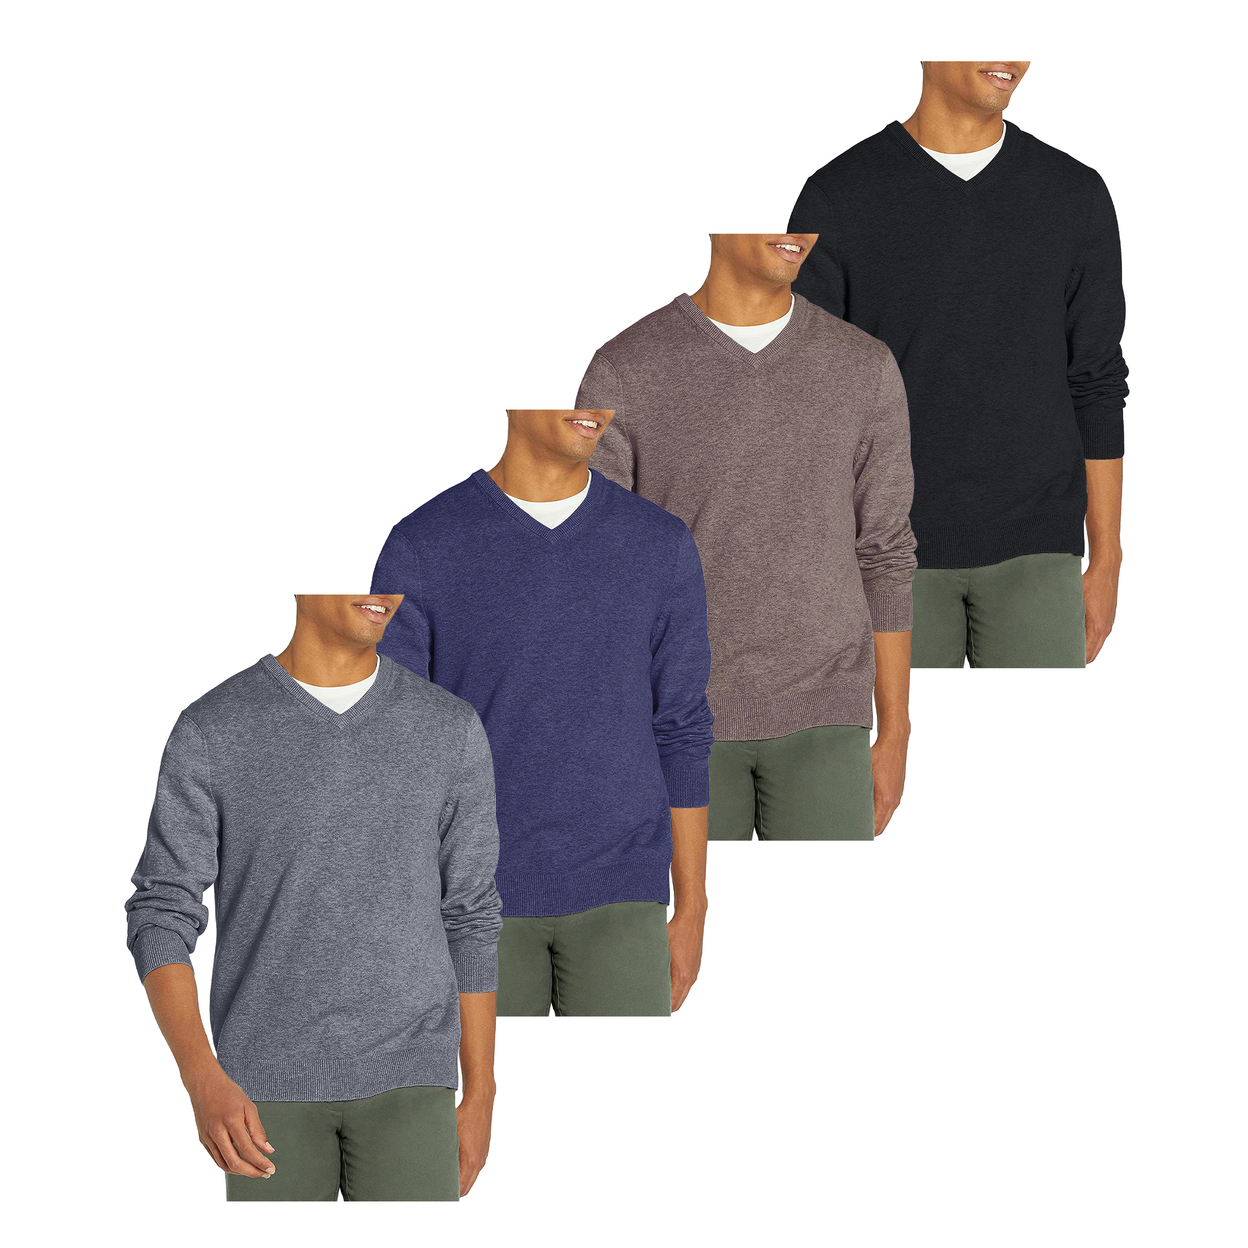 3-Pack: Men's Casual Ultra Soft Slim Fit Warm Knit V-Neck Sweater - Medium